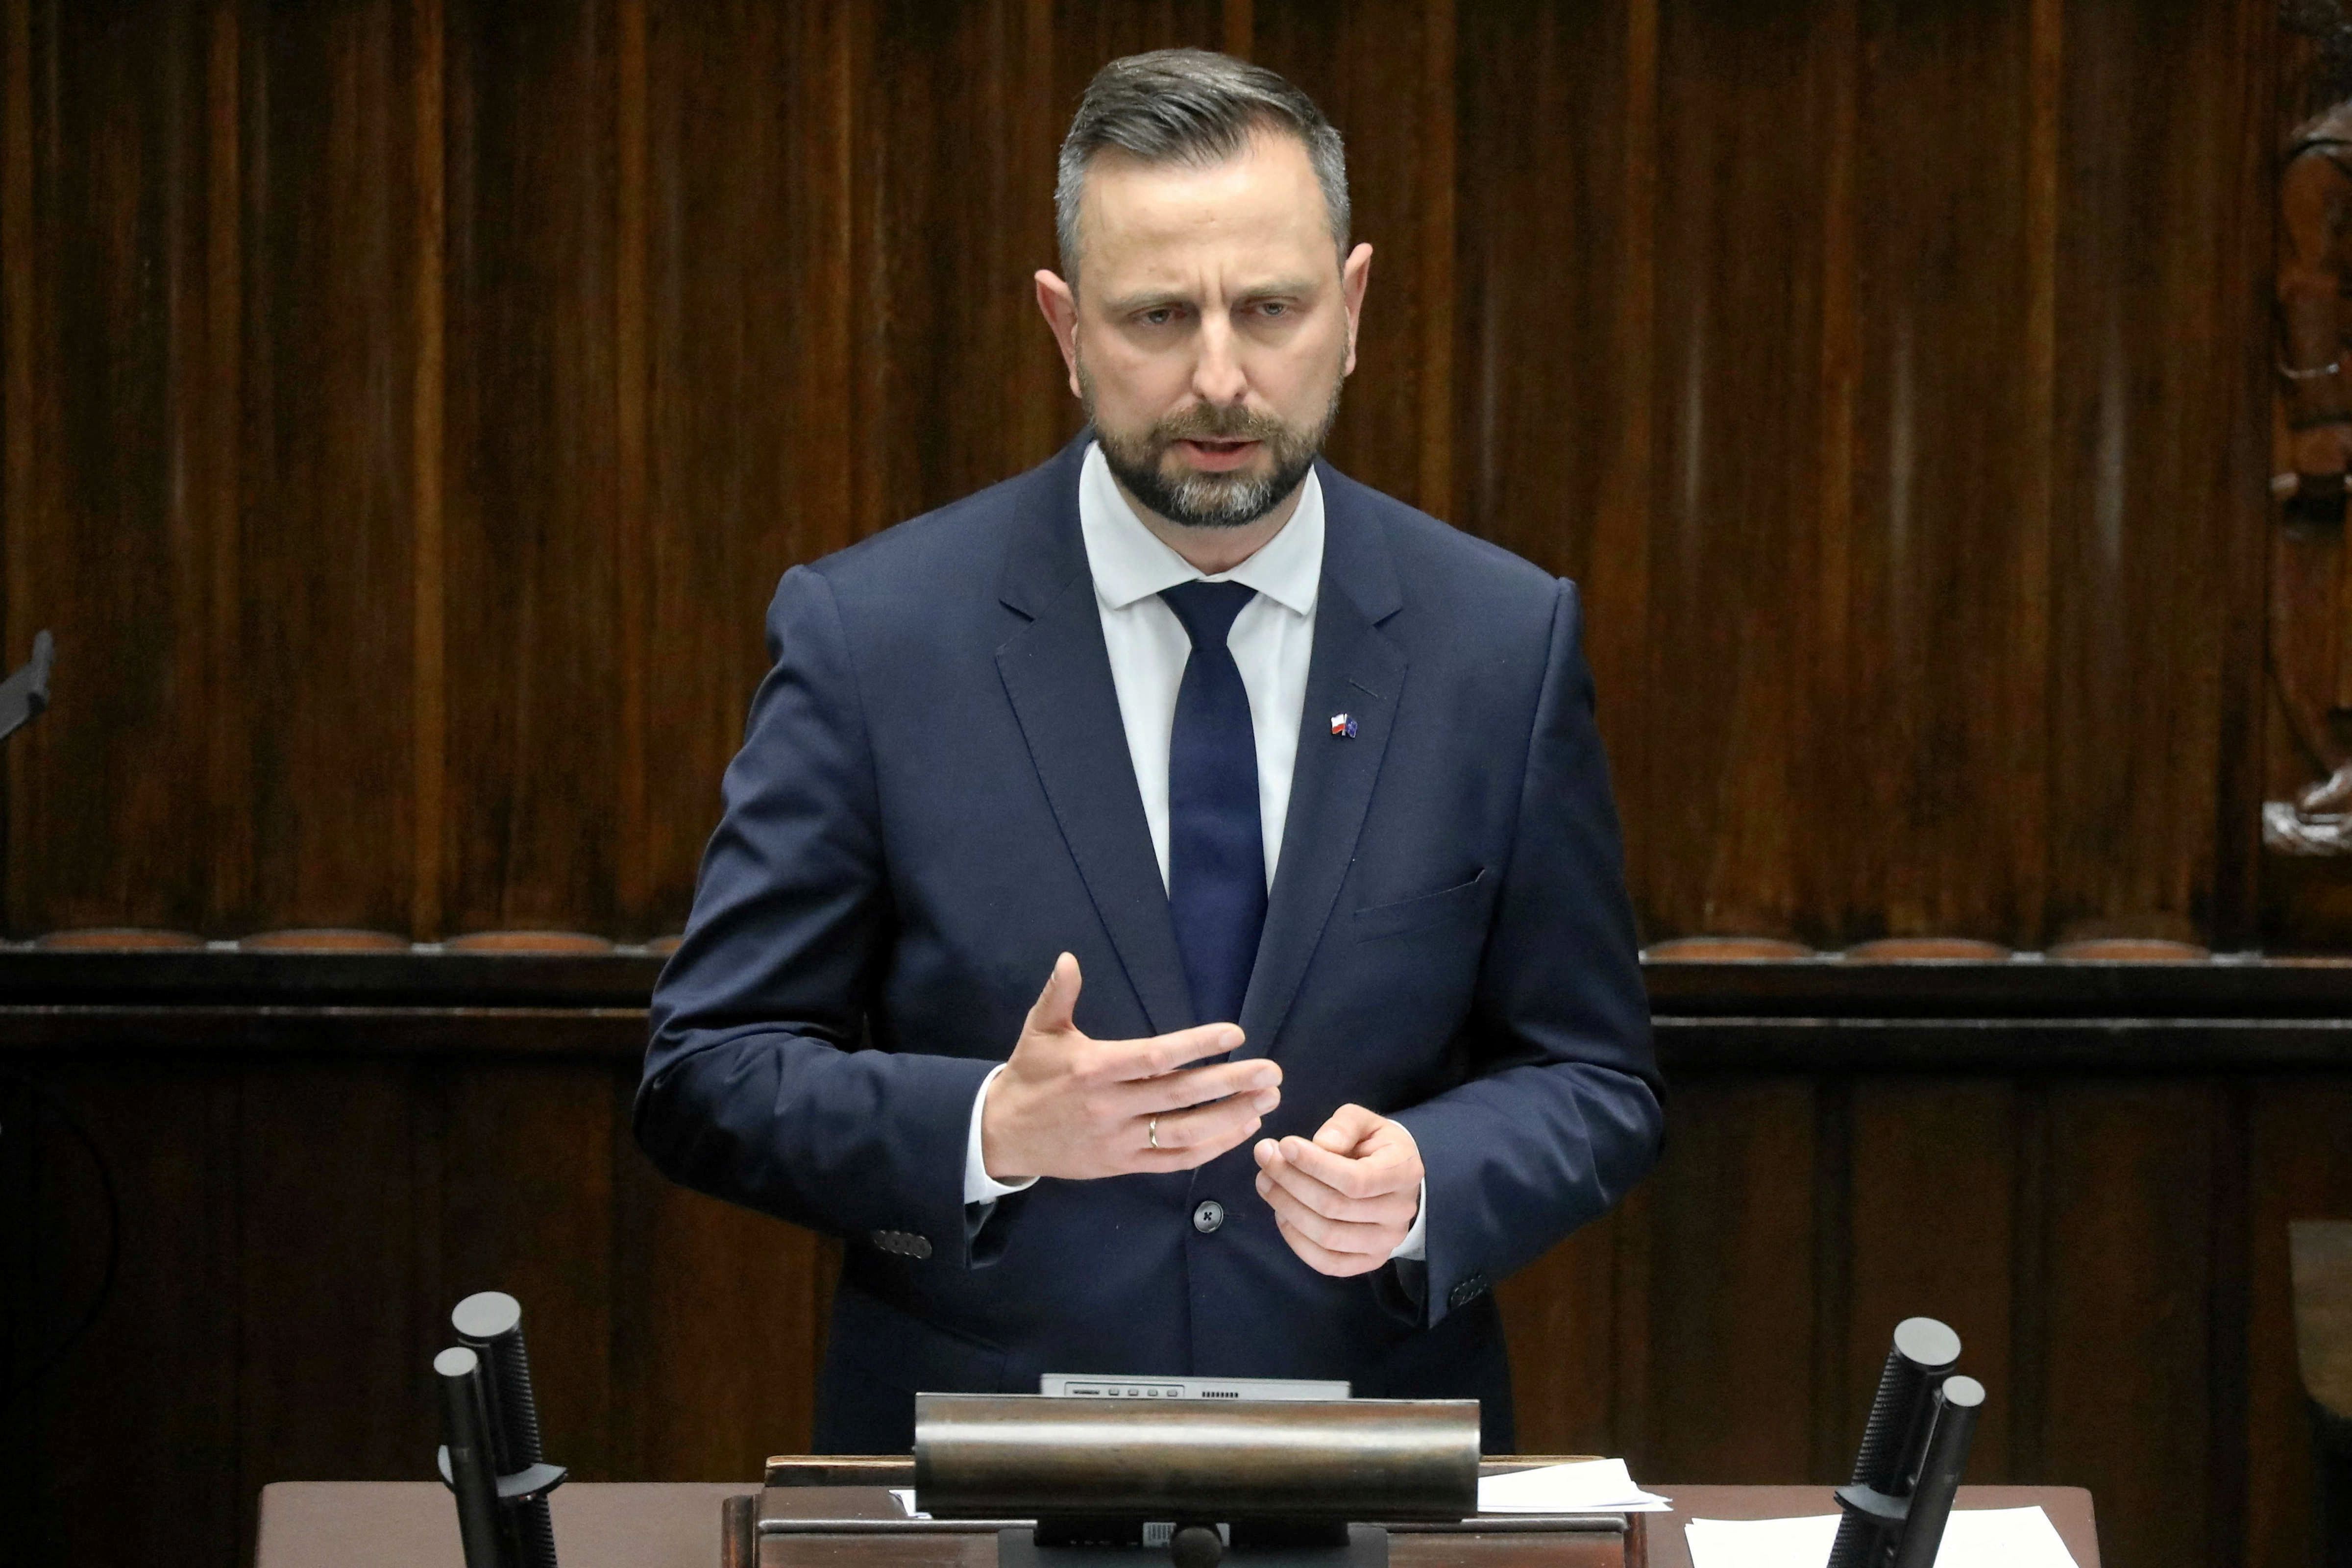 Polish Minister of Defence Kosiniak-Kamysz speaks at Parliament in Warsaw